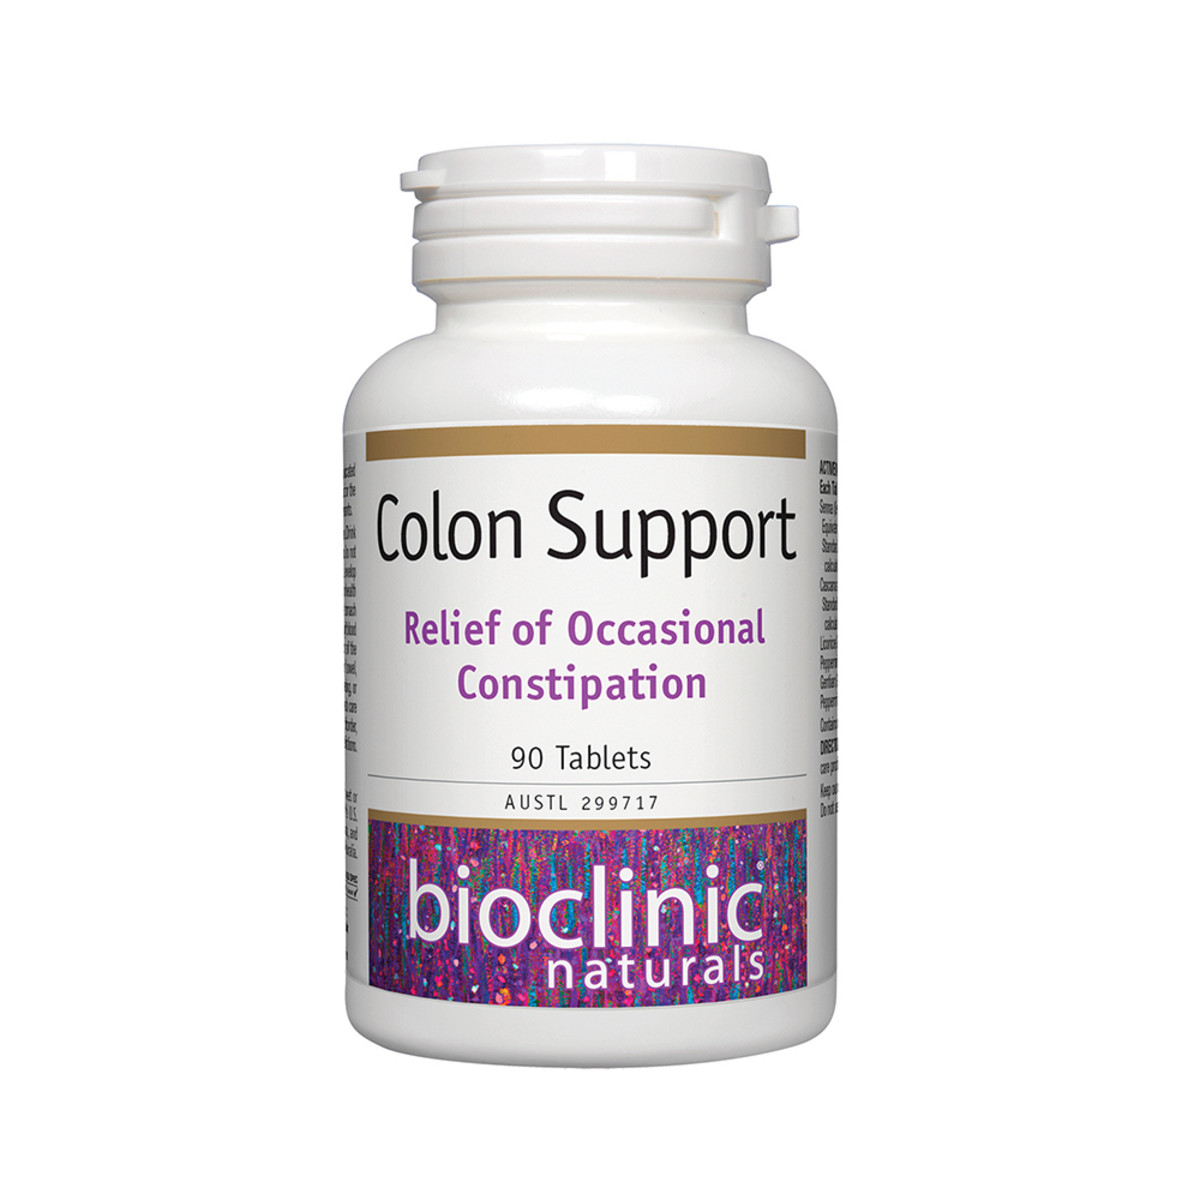 BIOCLINIC NATURALS - Colon Support